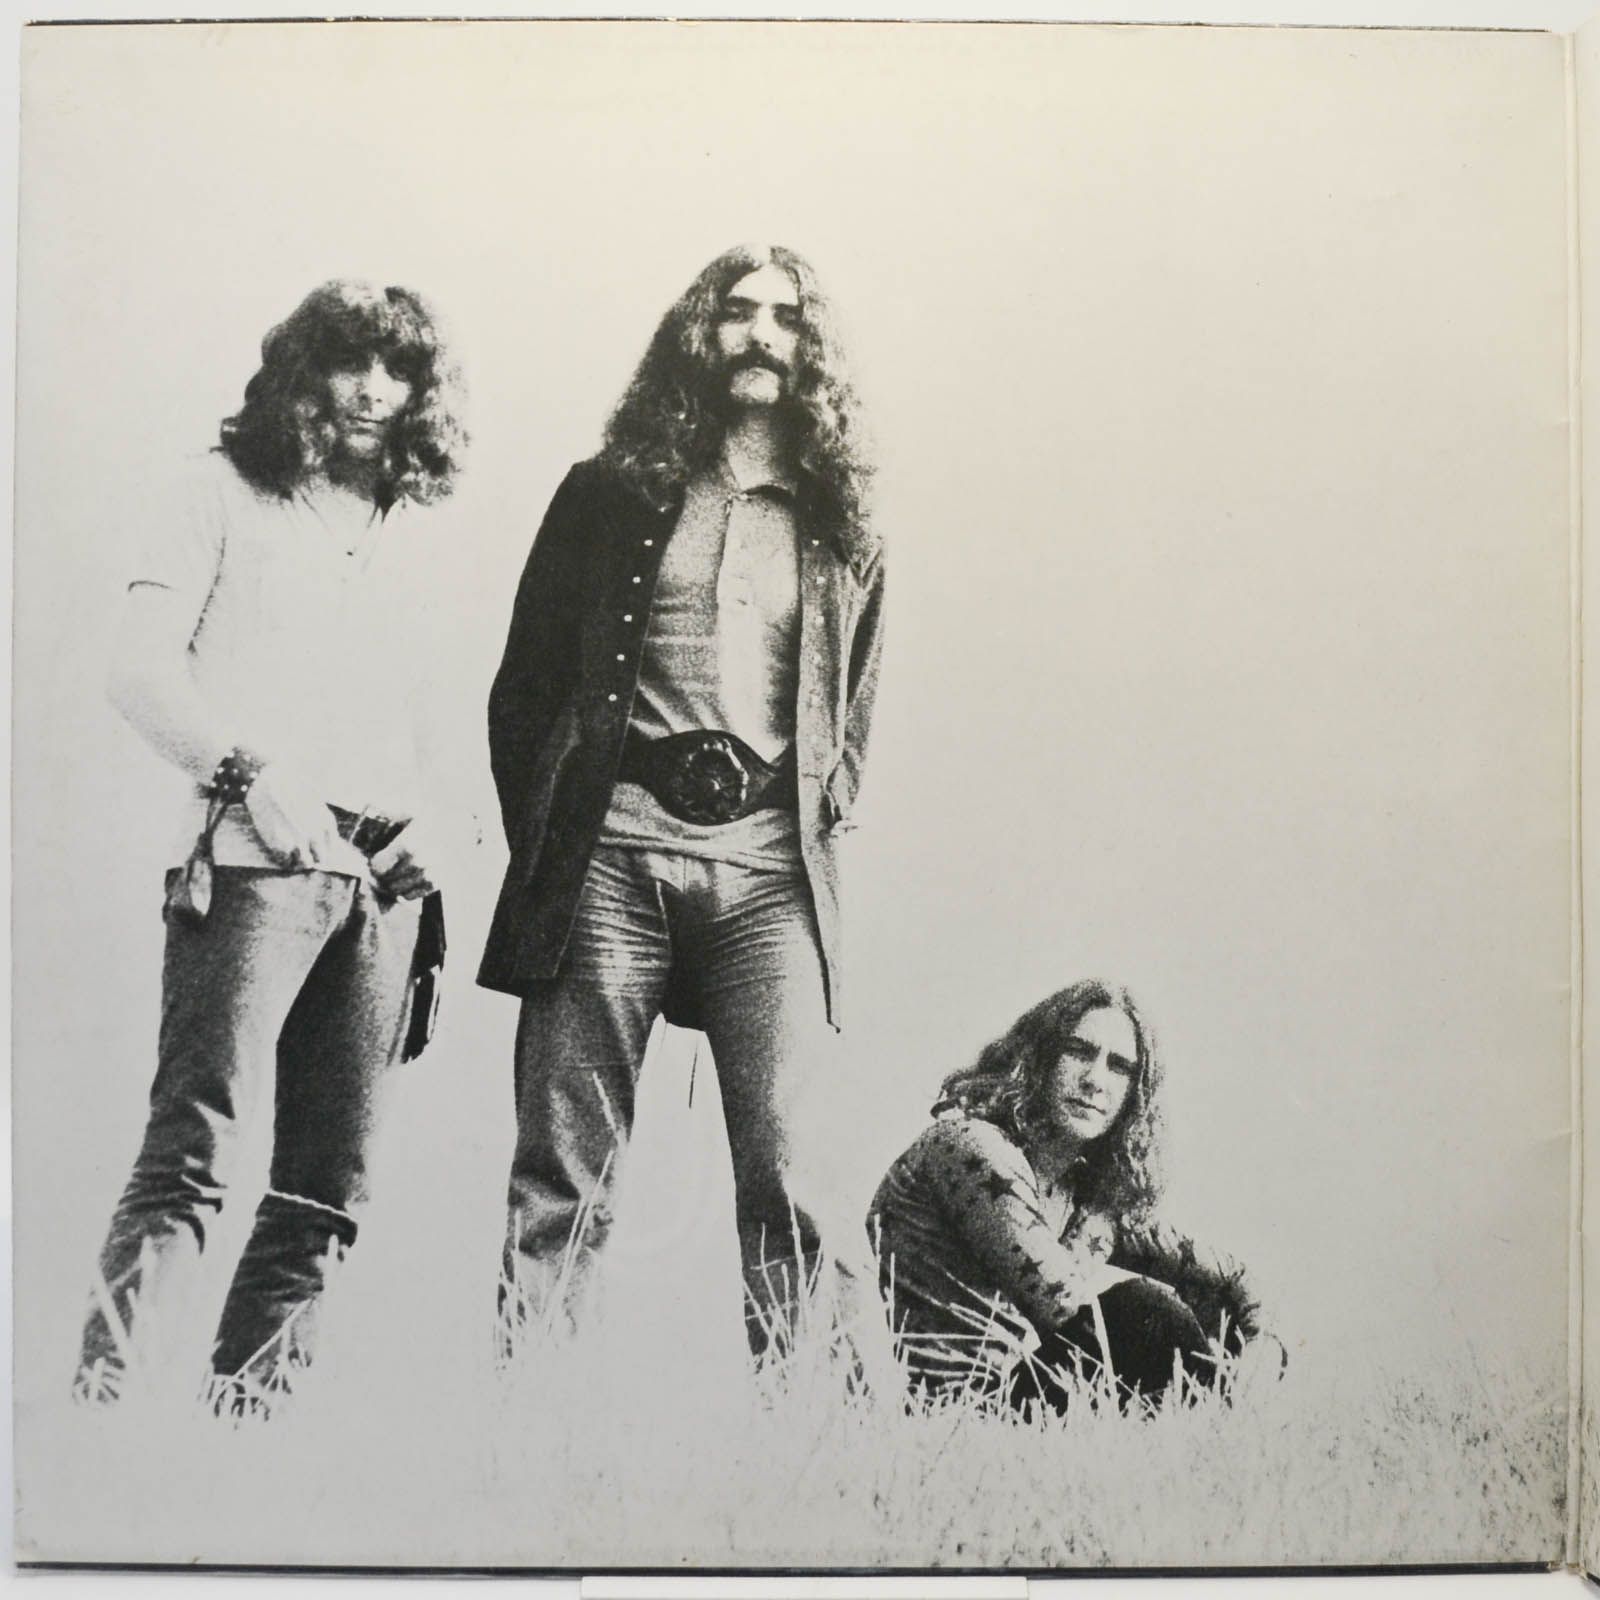 Black Sabbath — Paranoid (UK), 1970